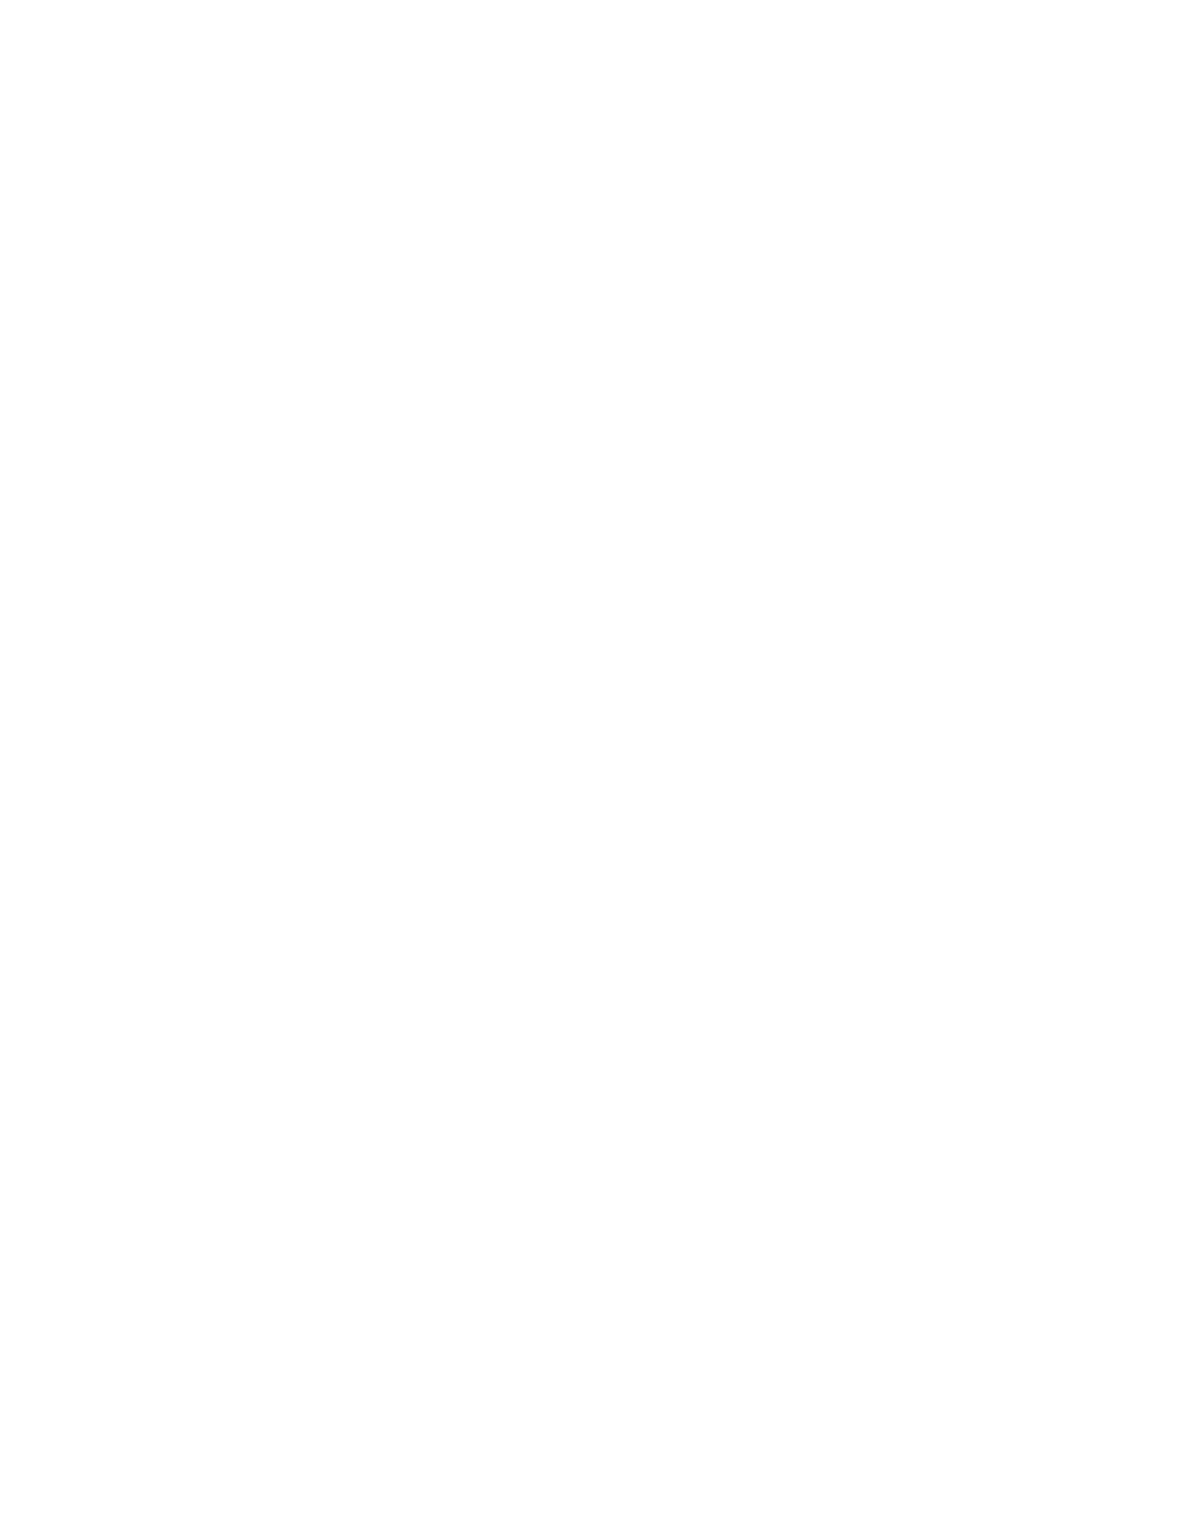 LEENO Industrial logo pour fonds sombres (PNG transparent)